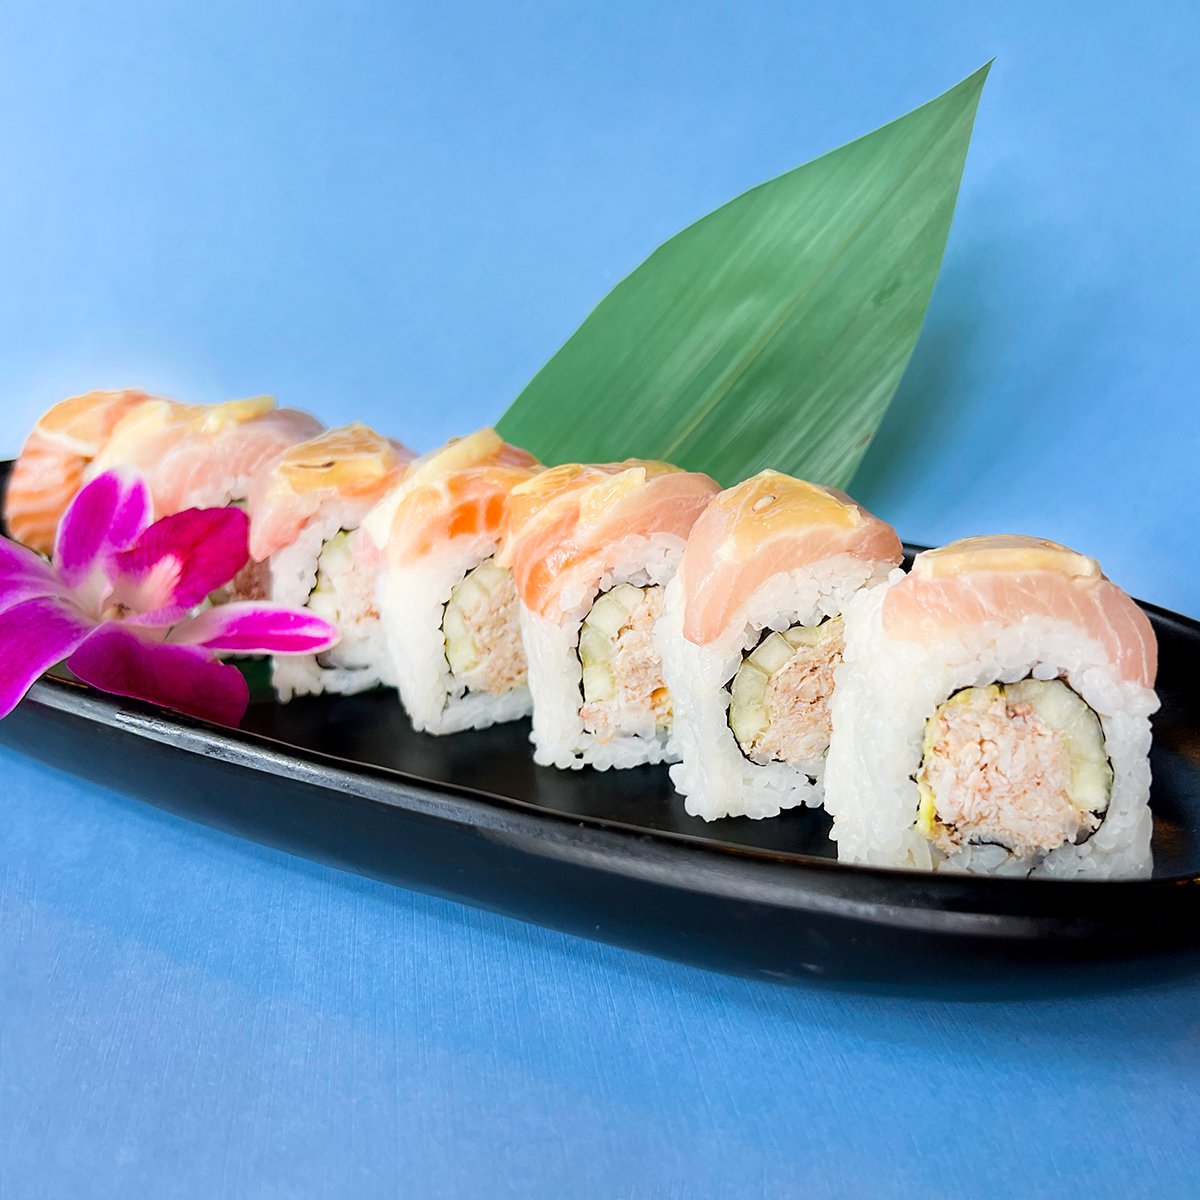  Hooked On Sushi best sushi restaurants in Carlsbad, Encinitas,  San Marcos, CA 